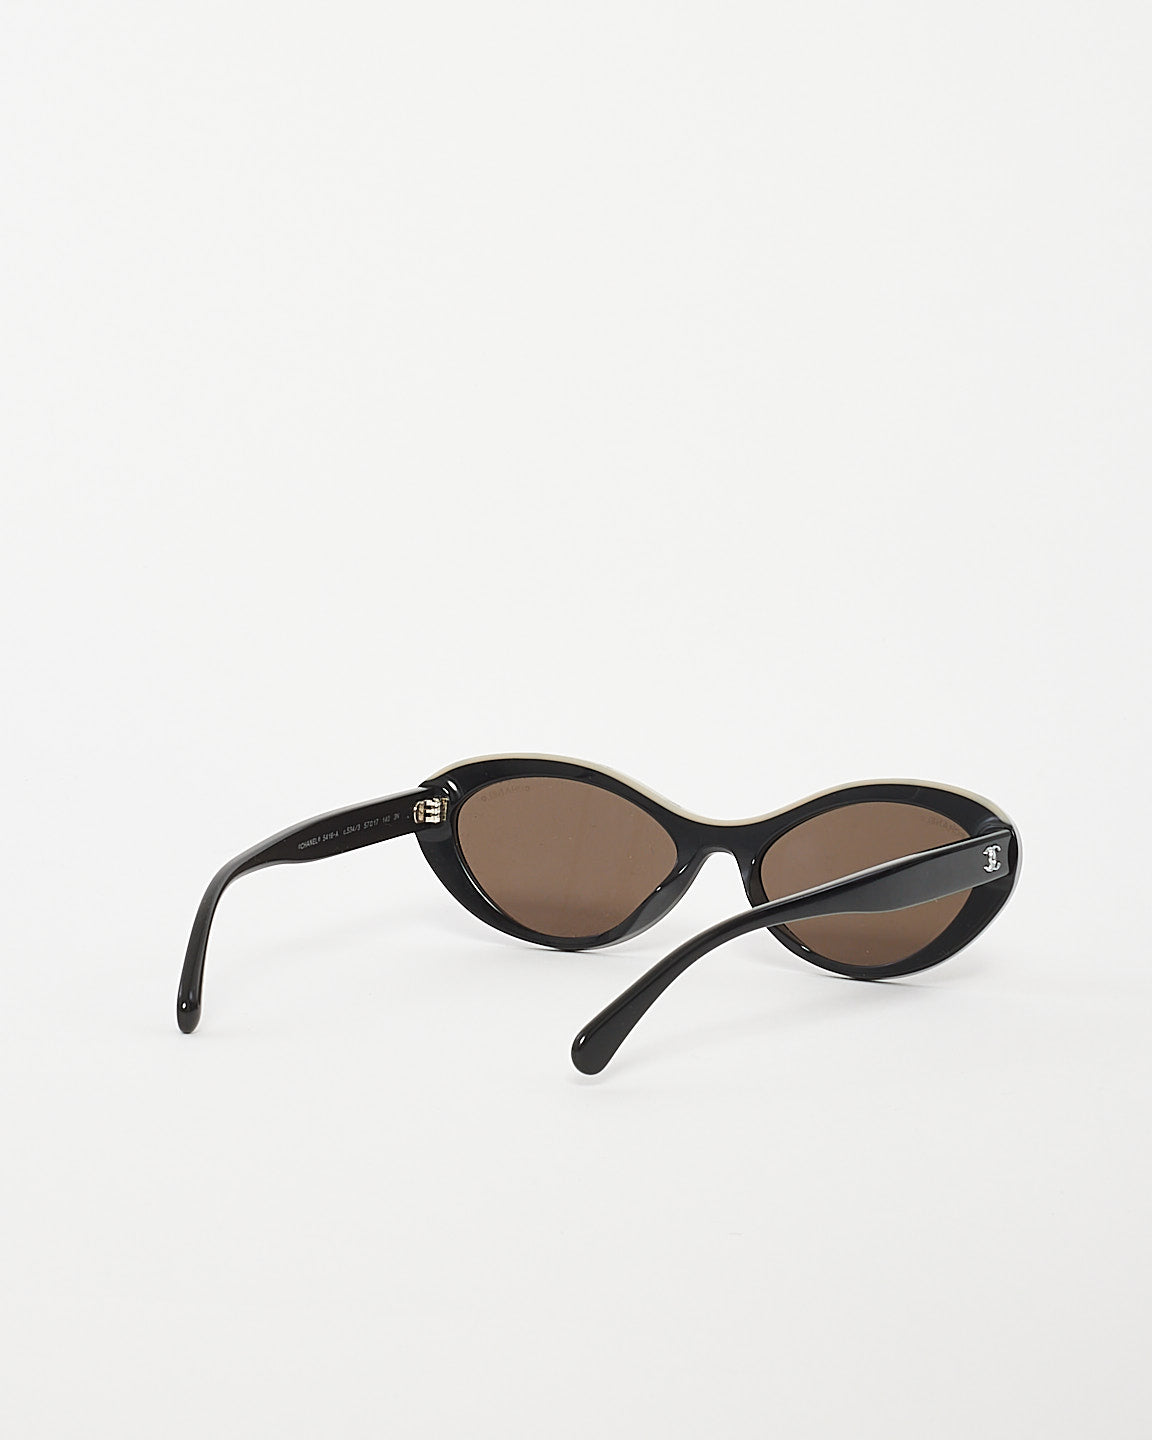 Chanel Black Acetate Cat Eye Logo Sunglasses 5416